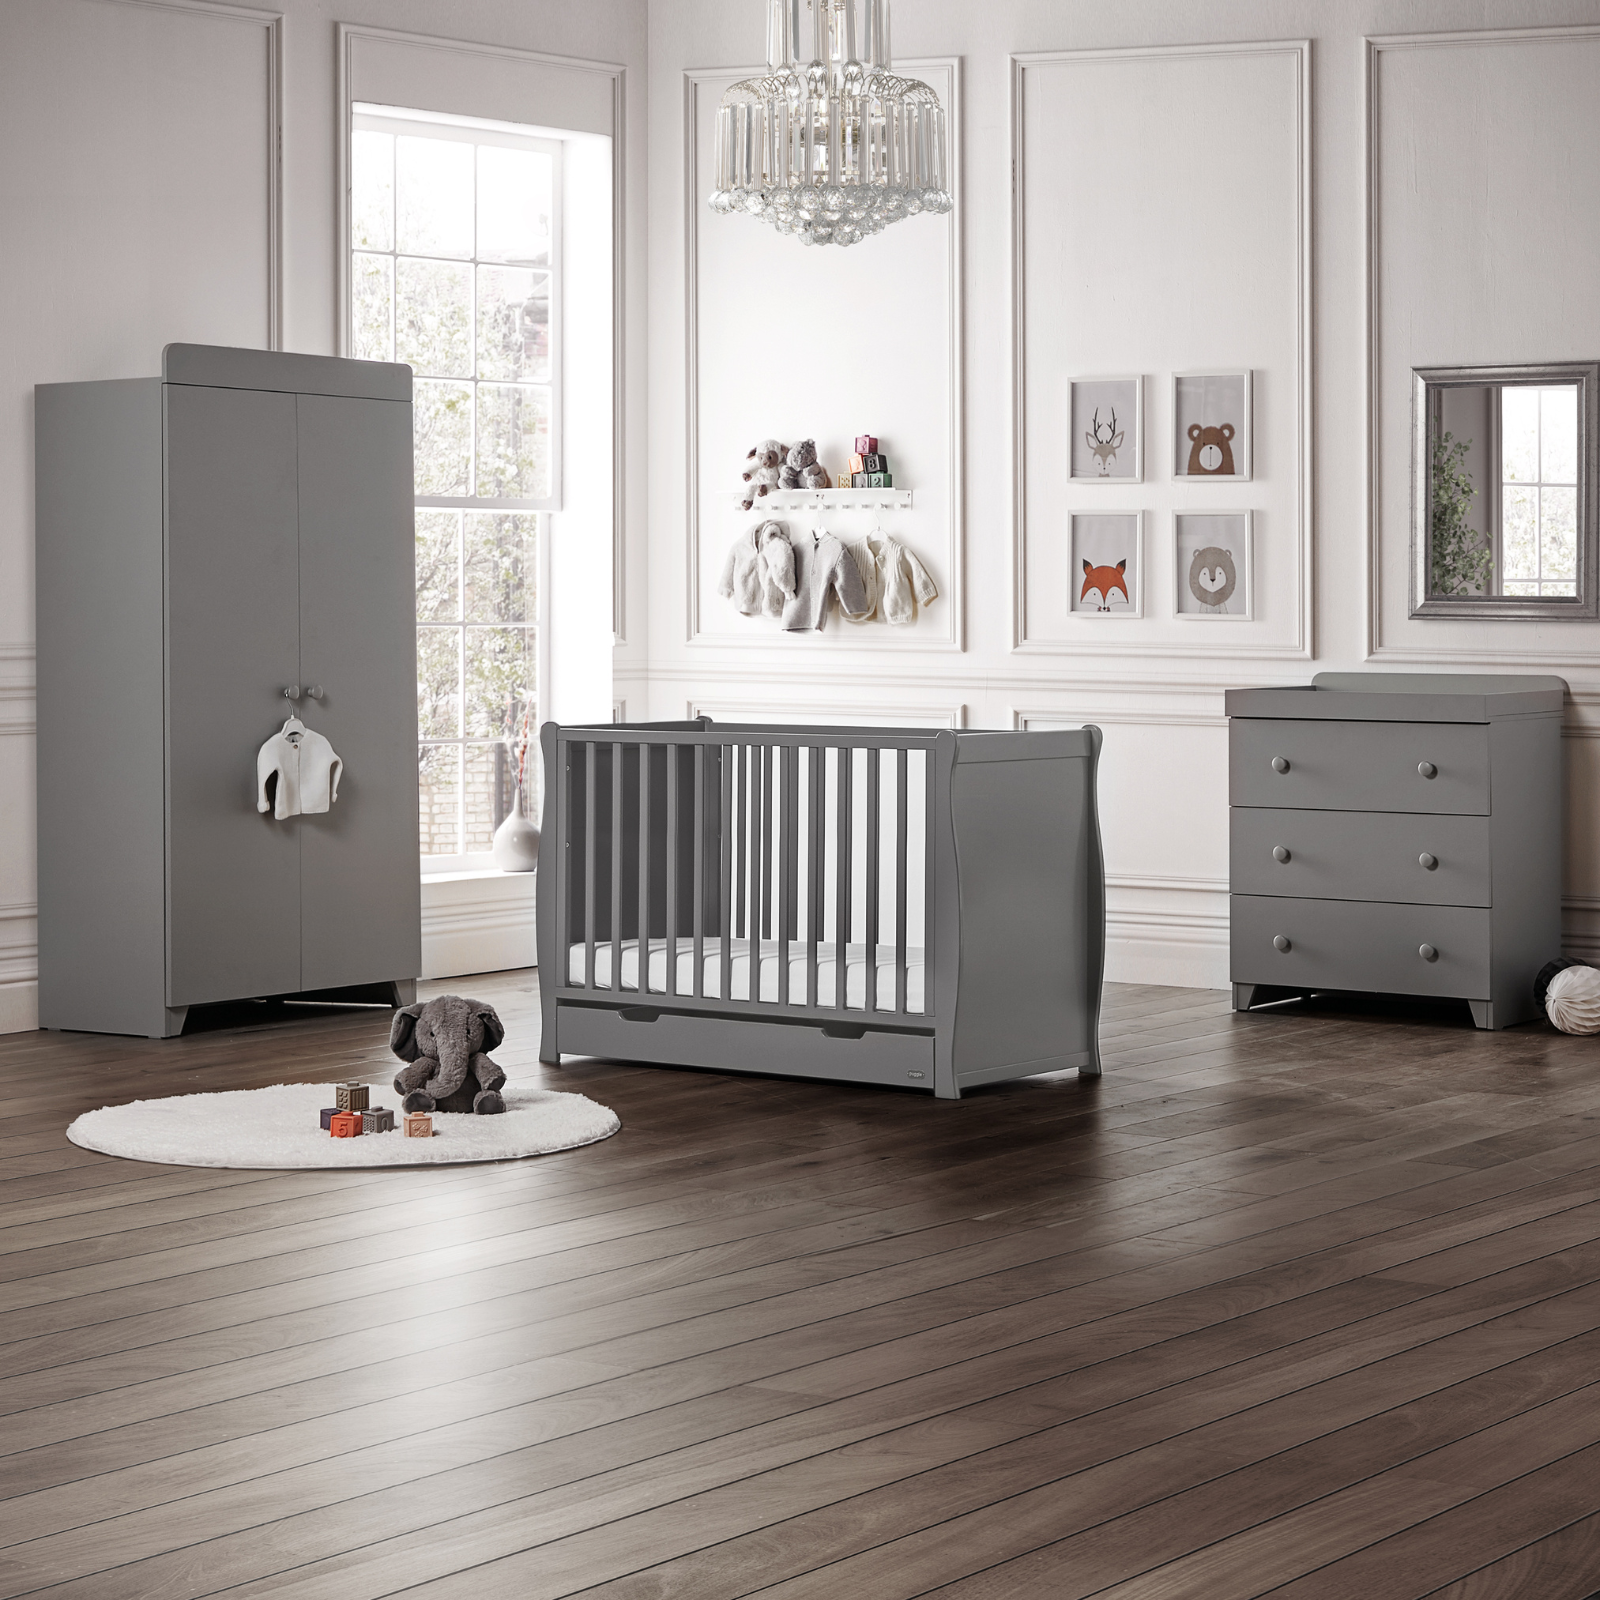 Puggle Chelford Sleigh Cot 6 Piece Nursery Furniture Set & Eco Fibre Cot Mattress - Grey